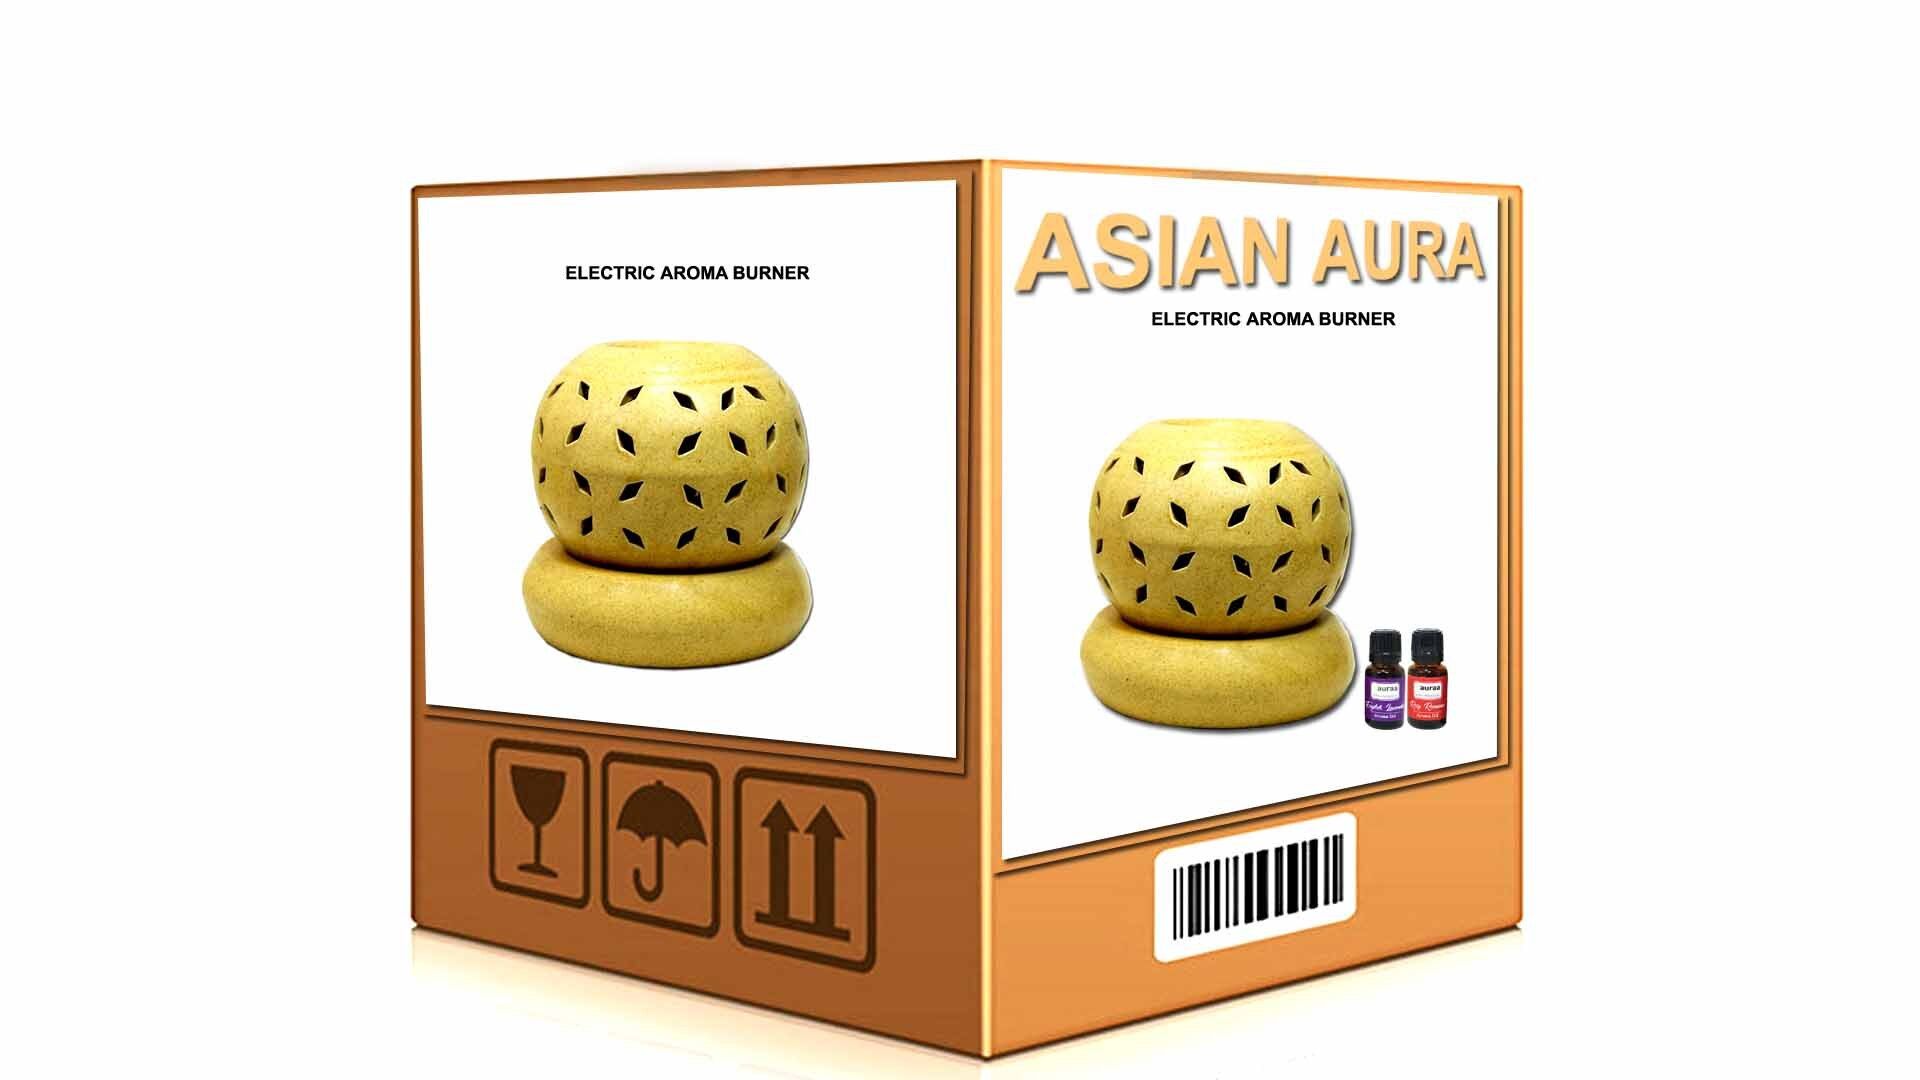 Asian Aura Ceramic Aromatic Oil Diffuser with 2 oil bottles AAEB 0016-B